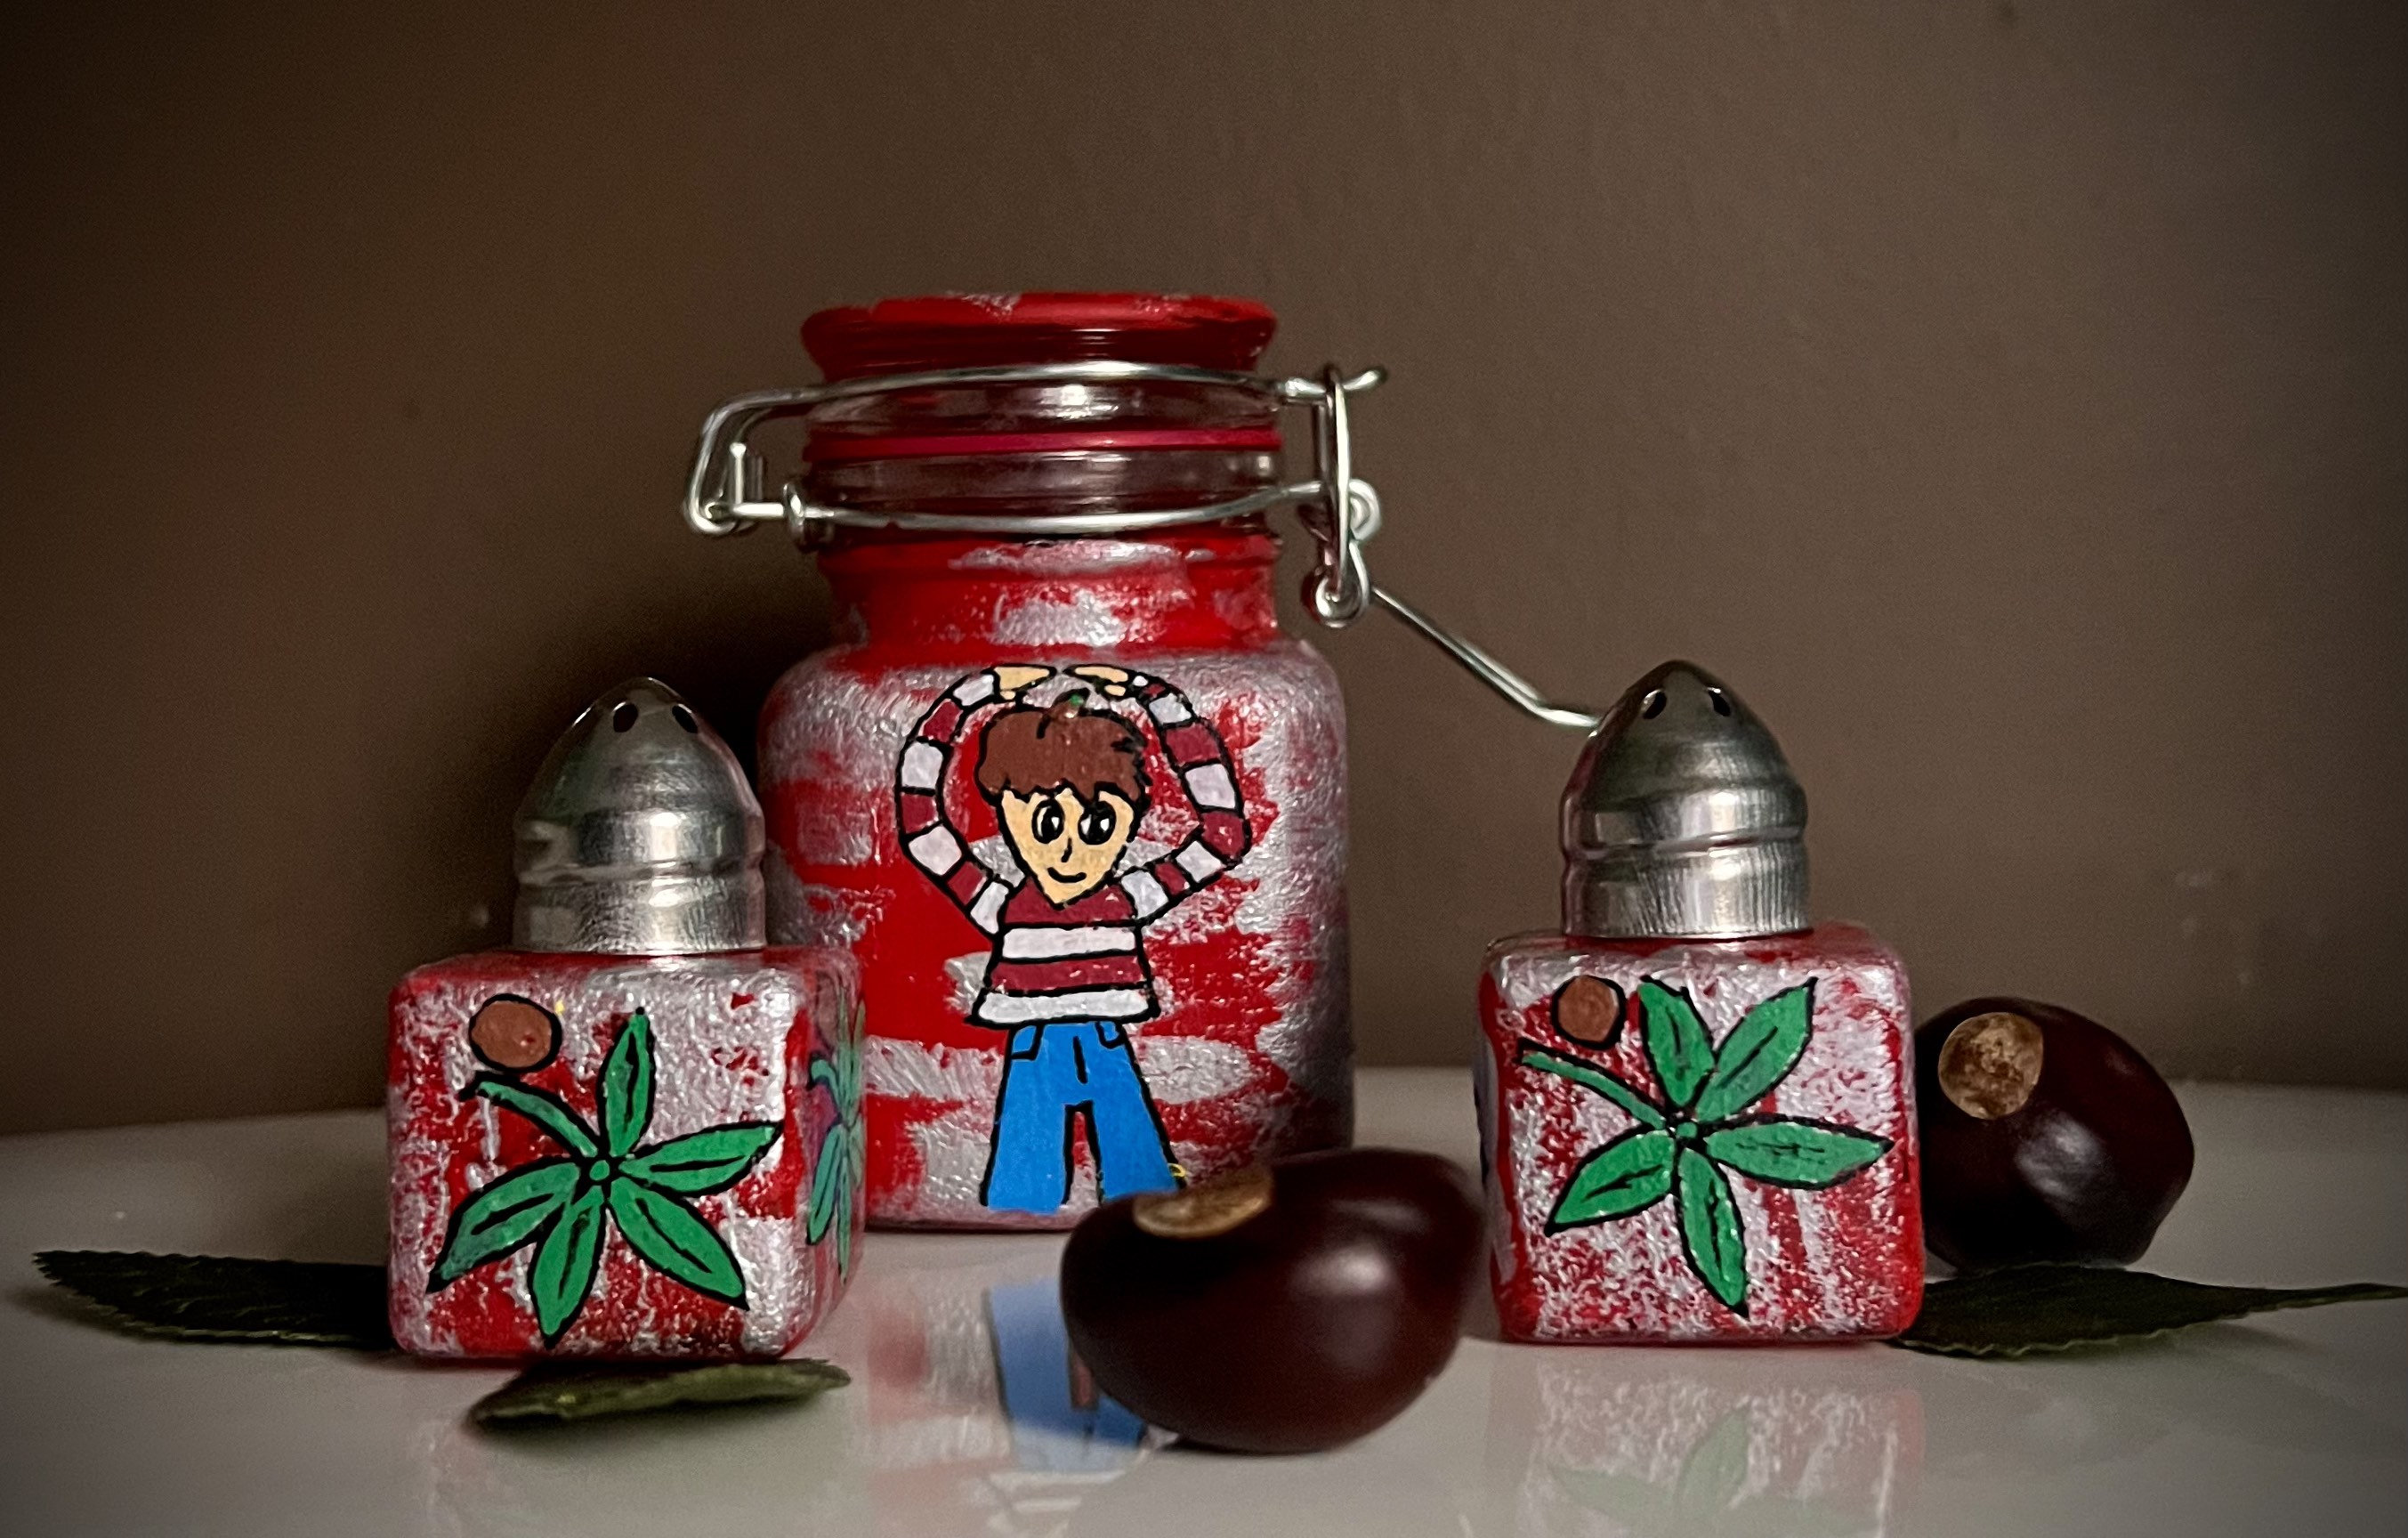 CITRONHAJ Spice jar, clear glass/stainless steel, 12 oz - IKEA